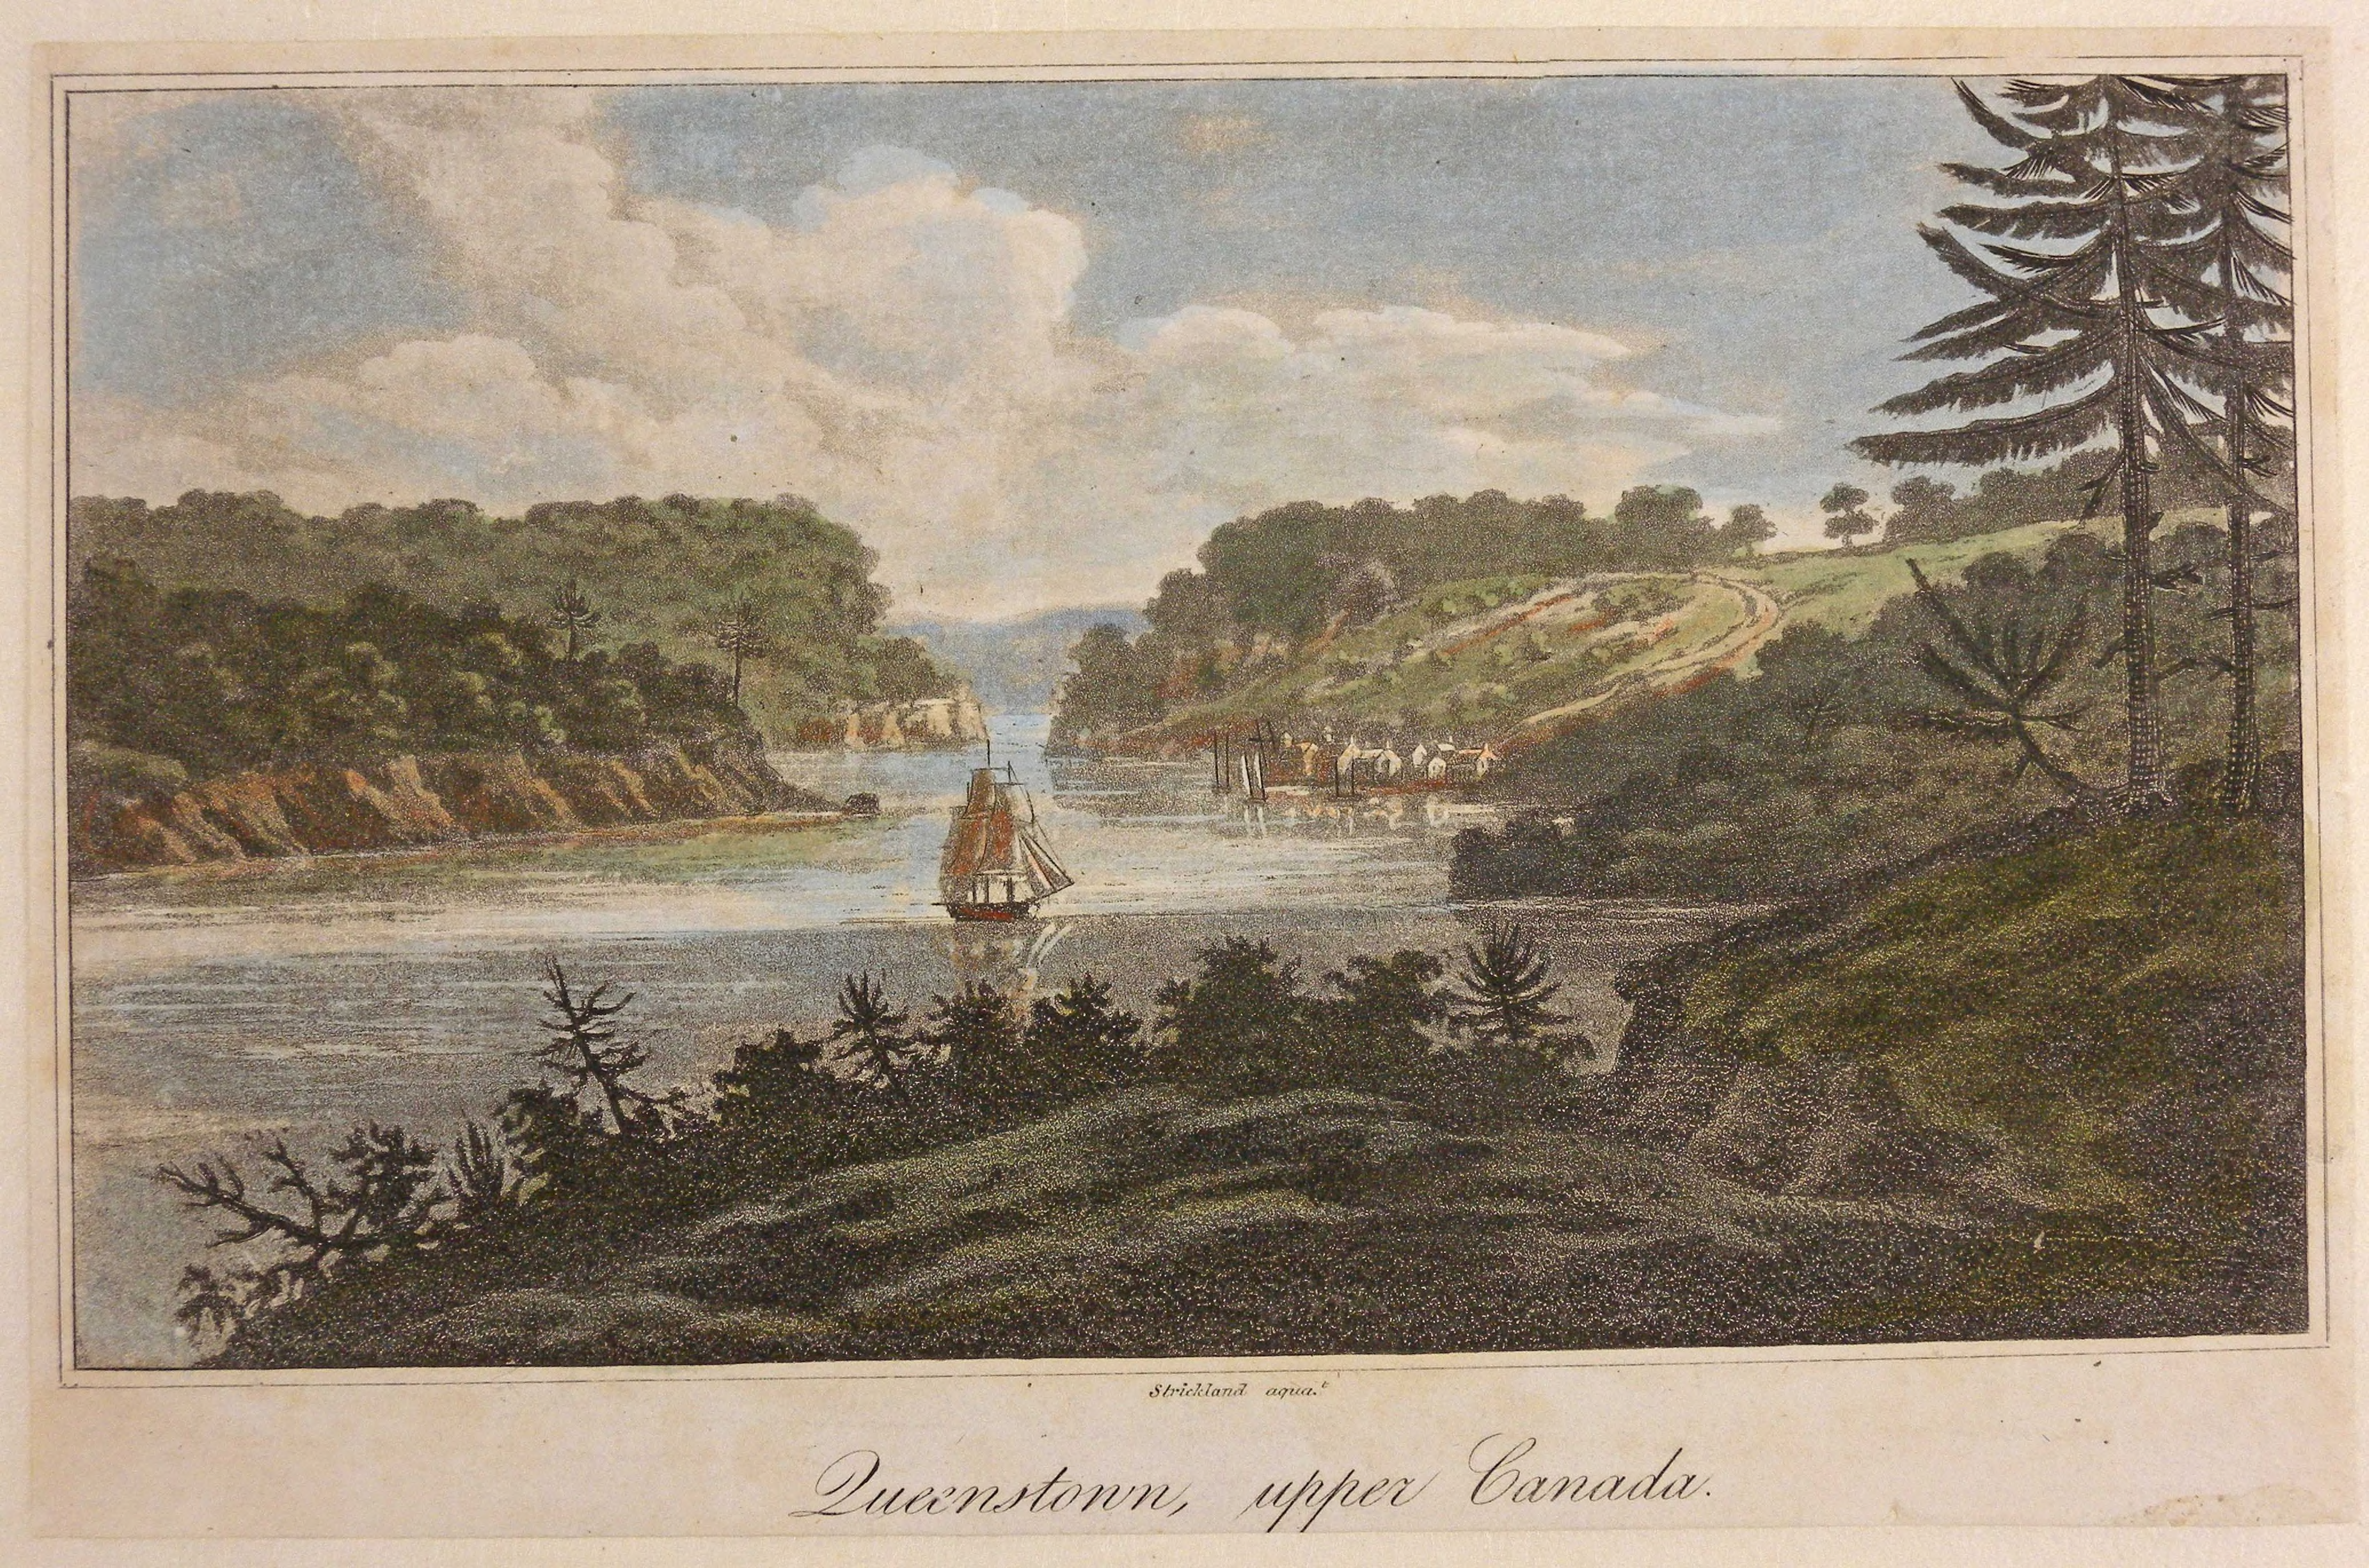 Queenston, Upper Canada. By William Strickland: 1812 History